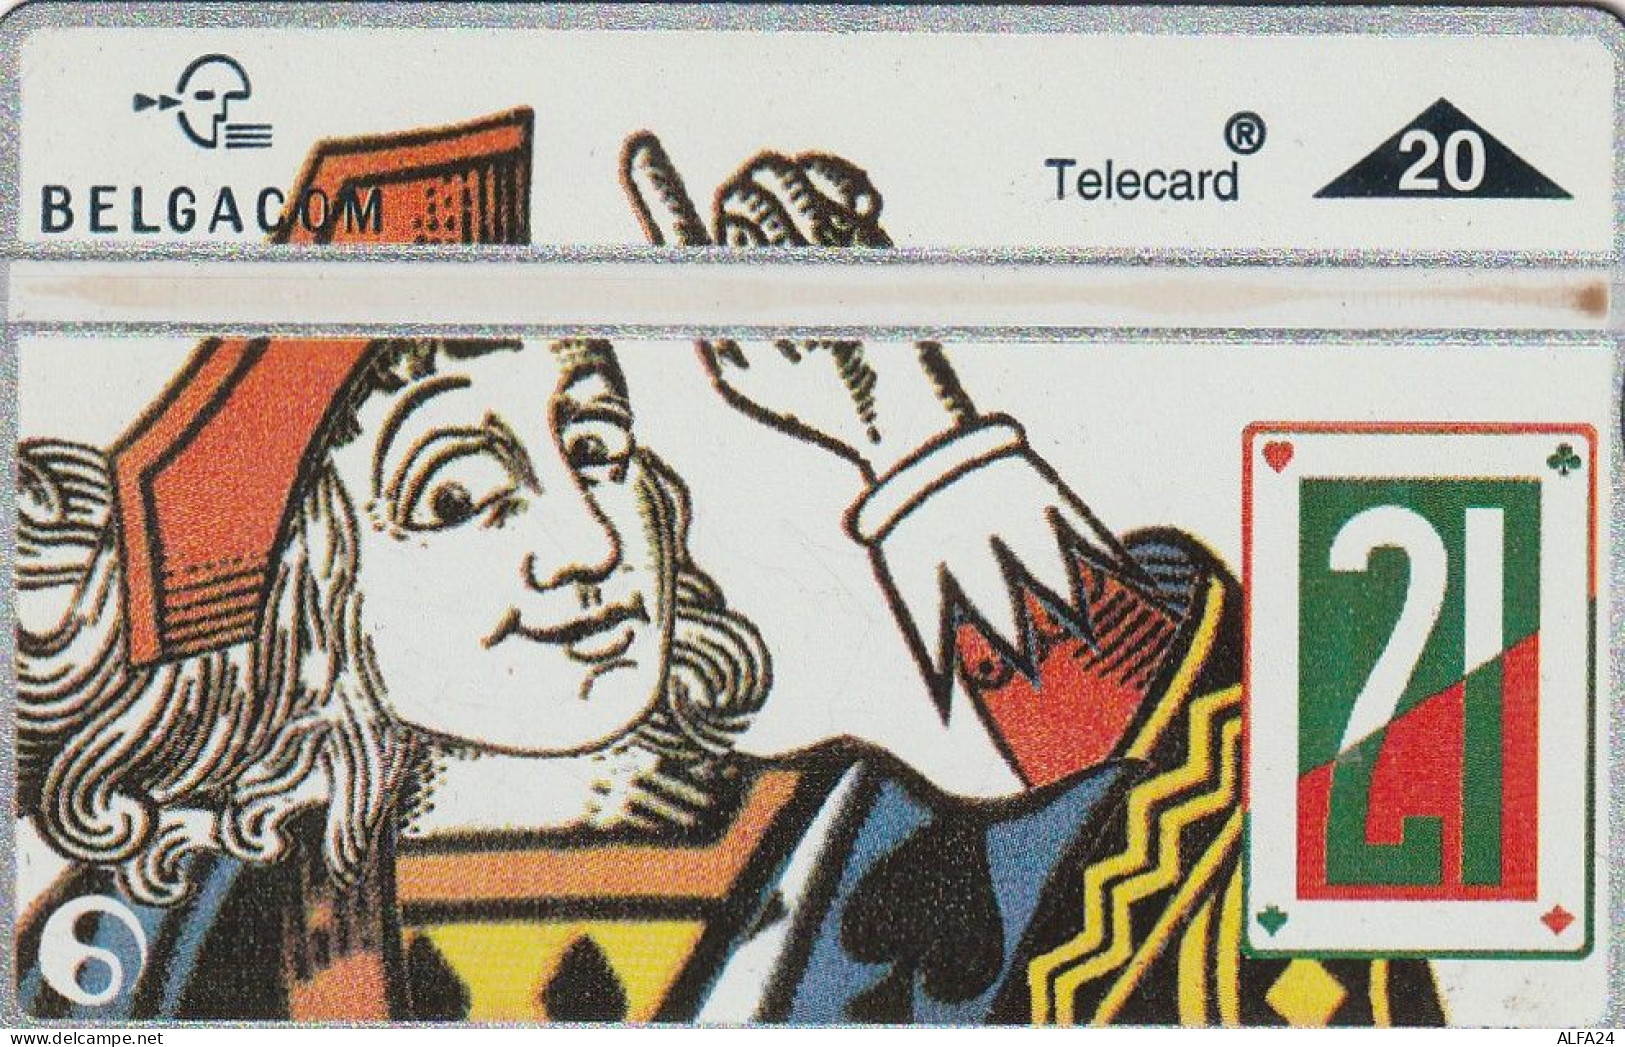 PHONE CARD BELGIO LG (CV6616 - Senza Chip